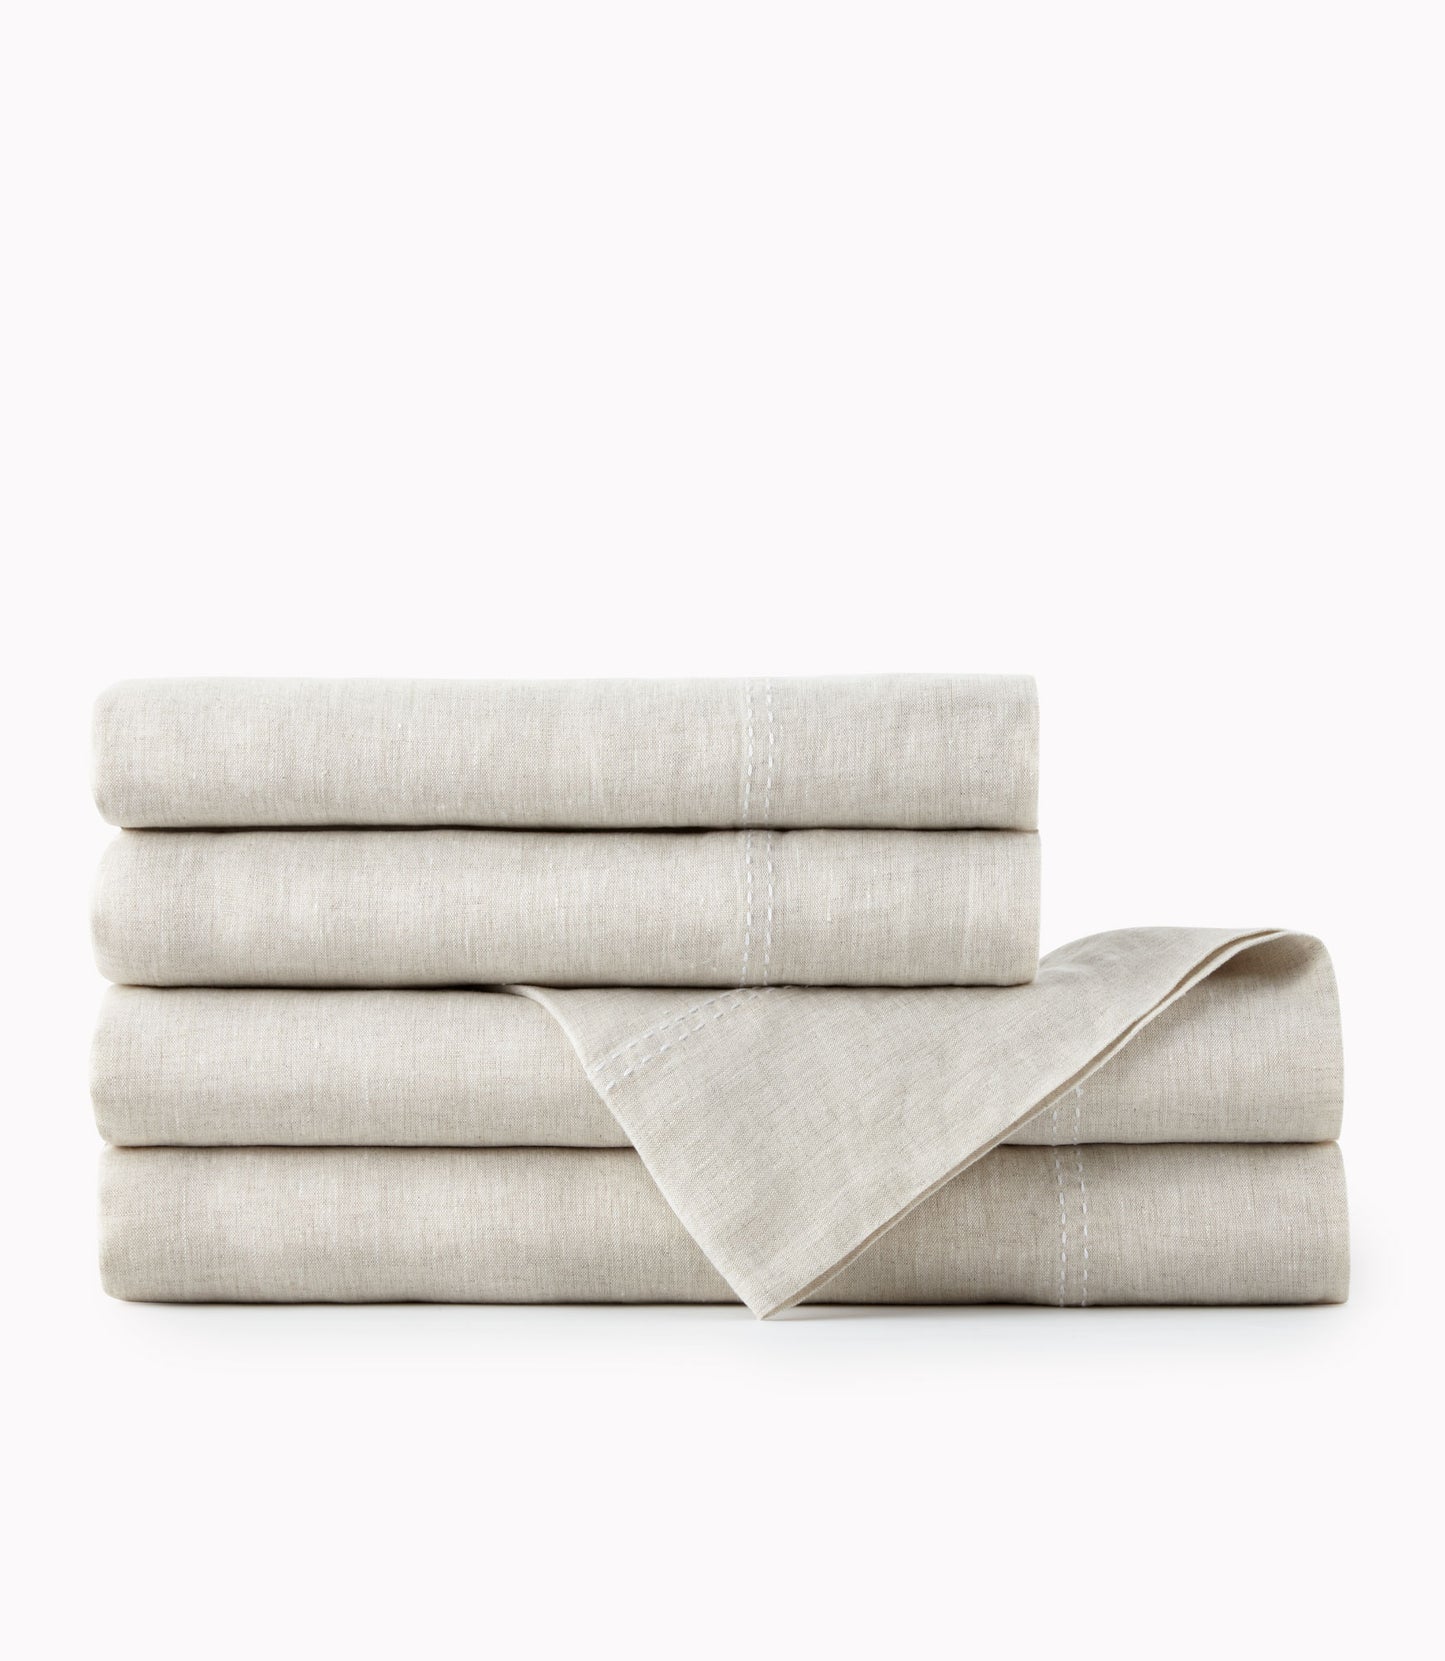 European Washed Linen Sheet Set, Natural